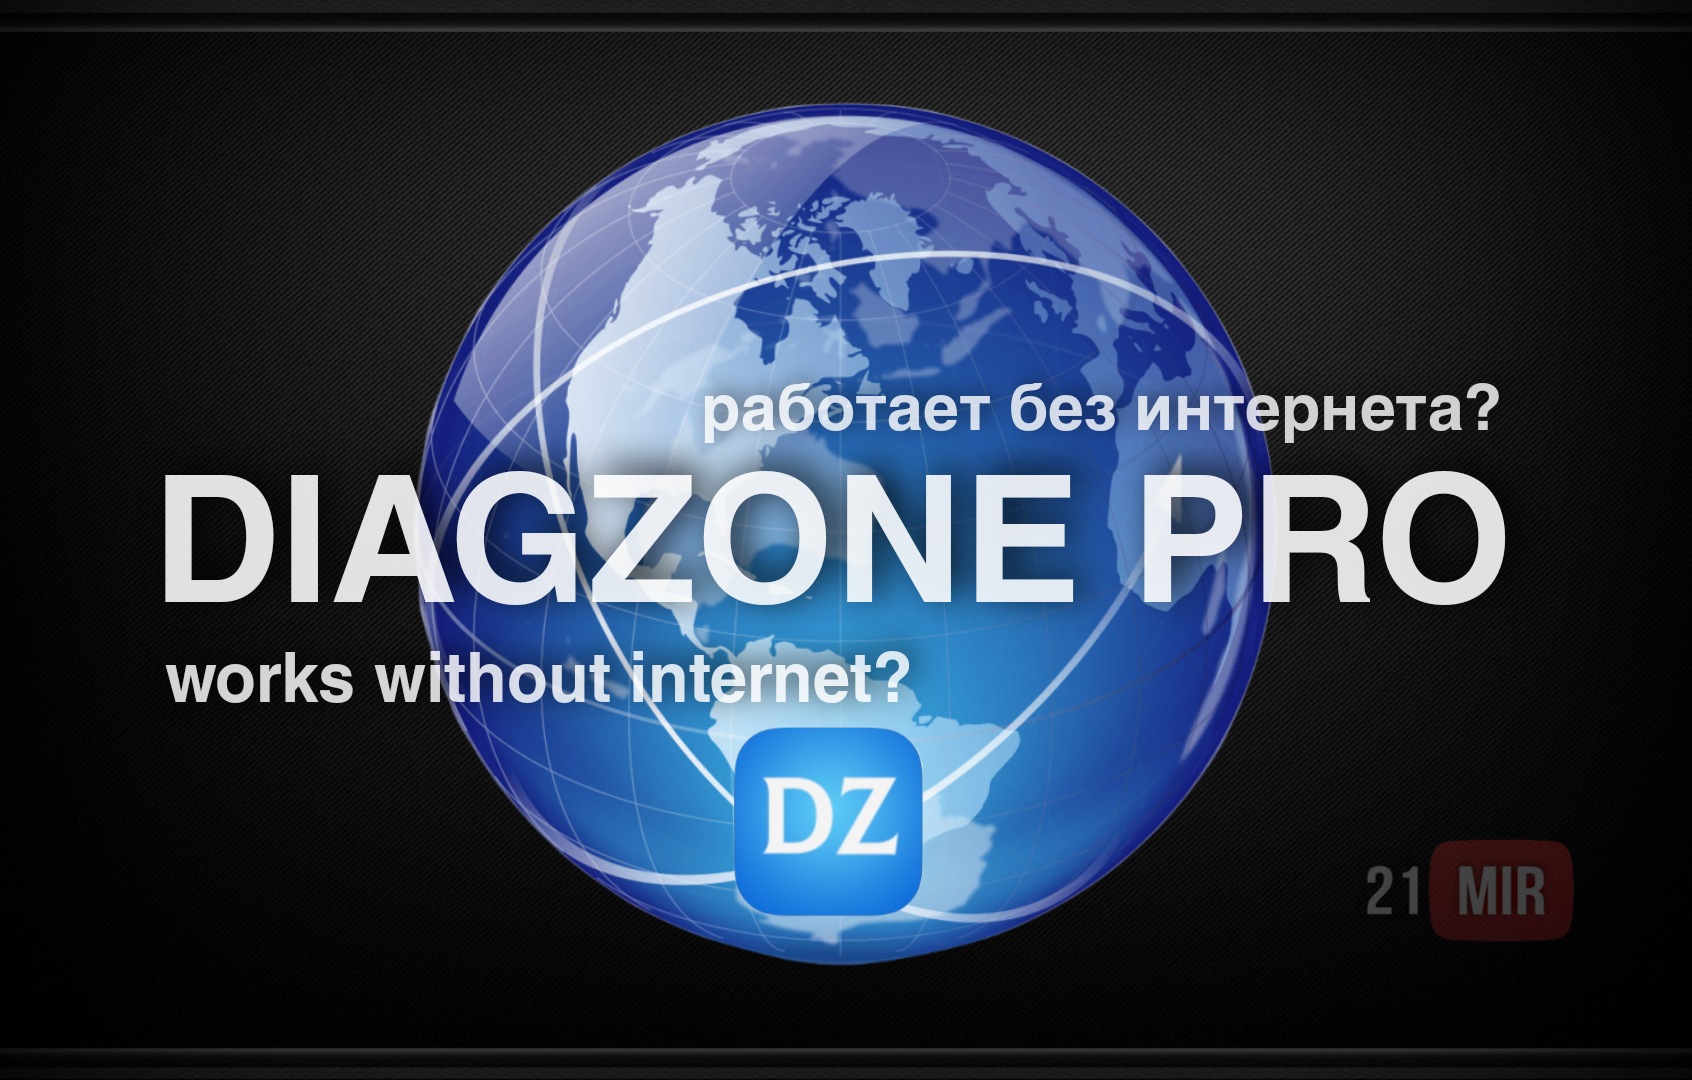 Диагзоне. Программа диагзон. Diagzone Pro. Как работает интернет.